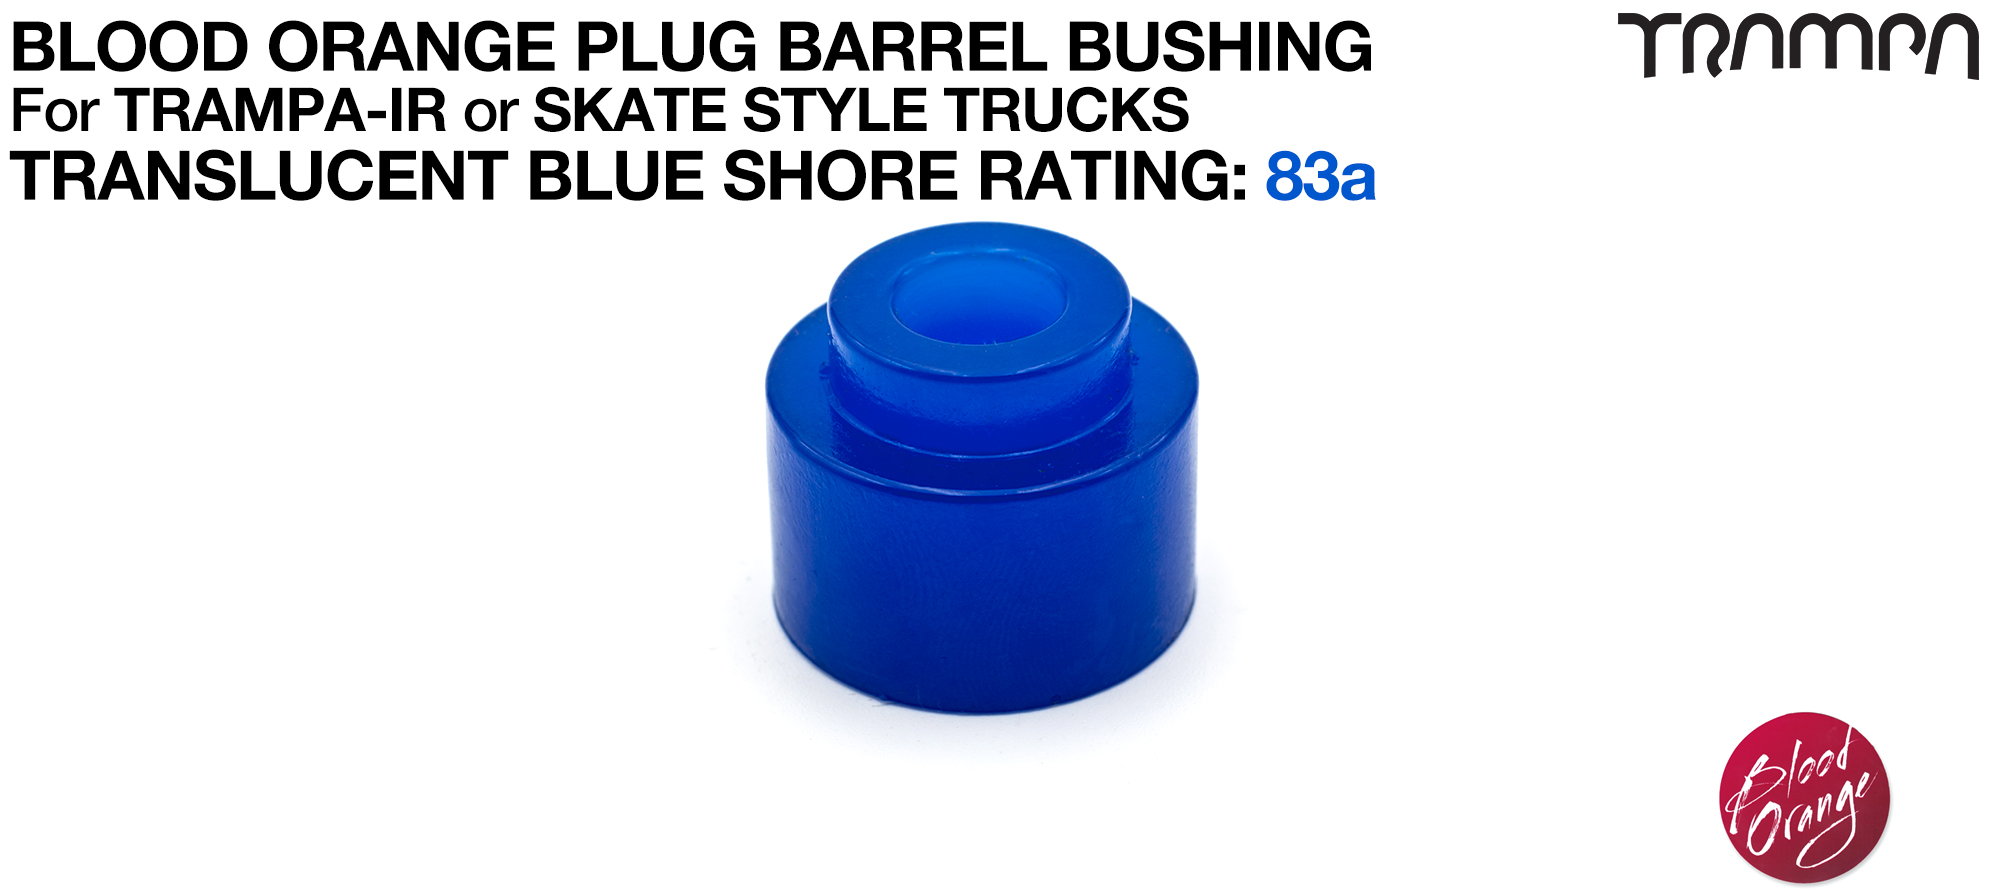 Blood Orange PLUG BARREL - TRANSLUCENT BLUE 89a